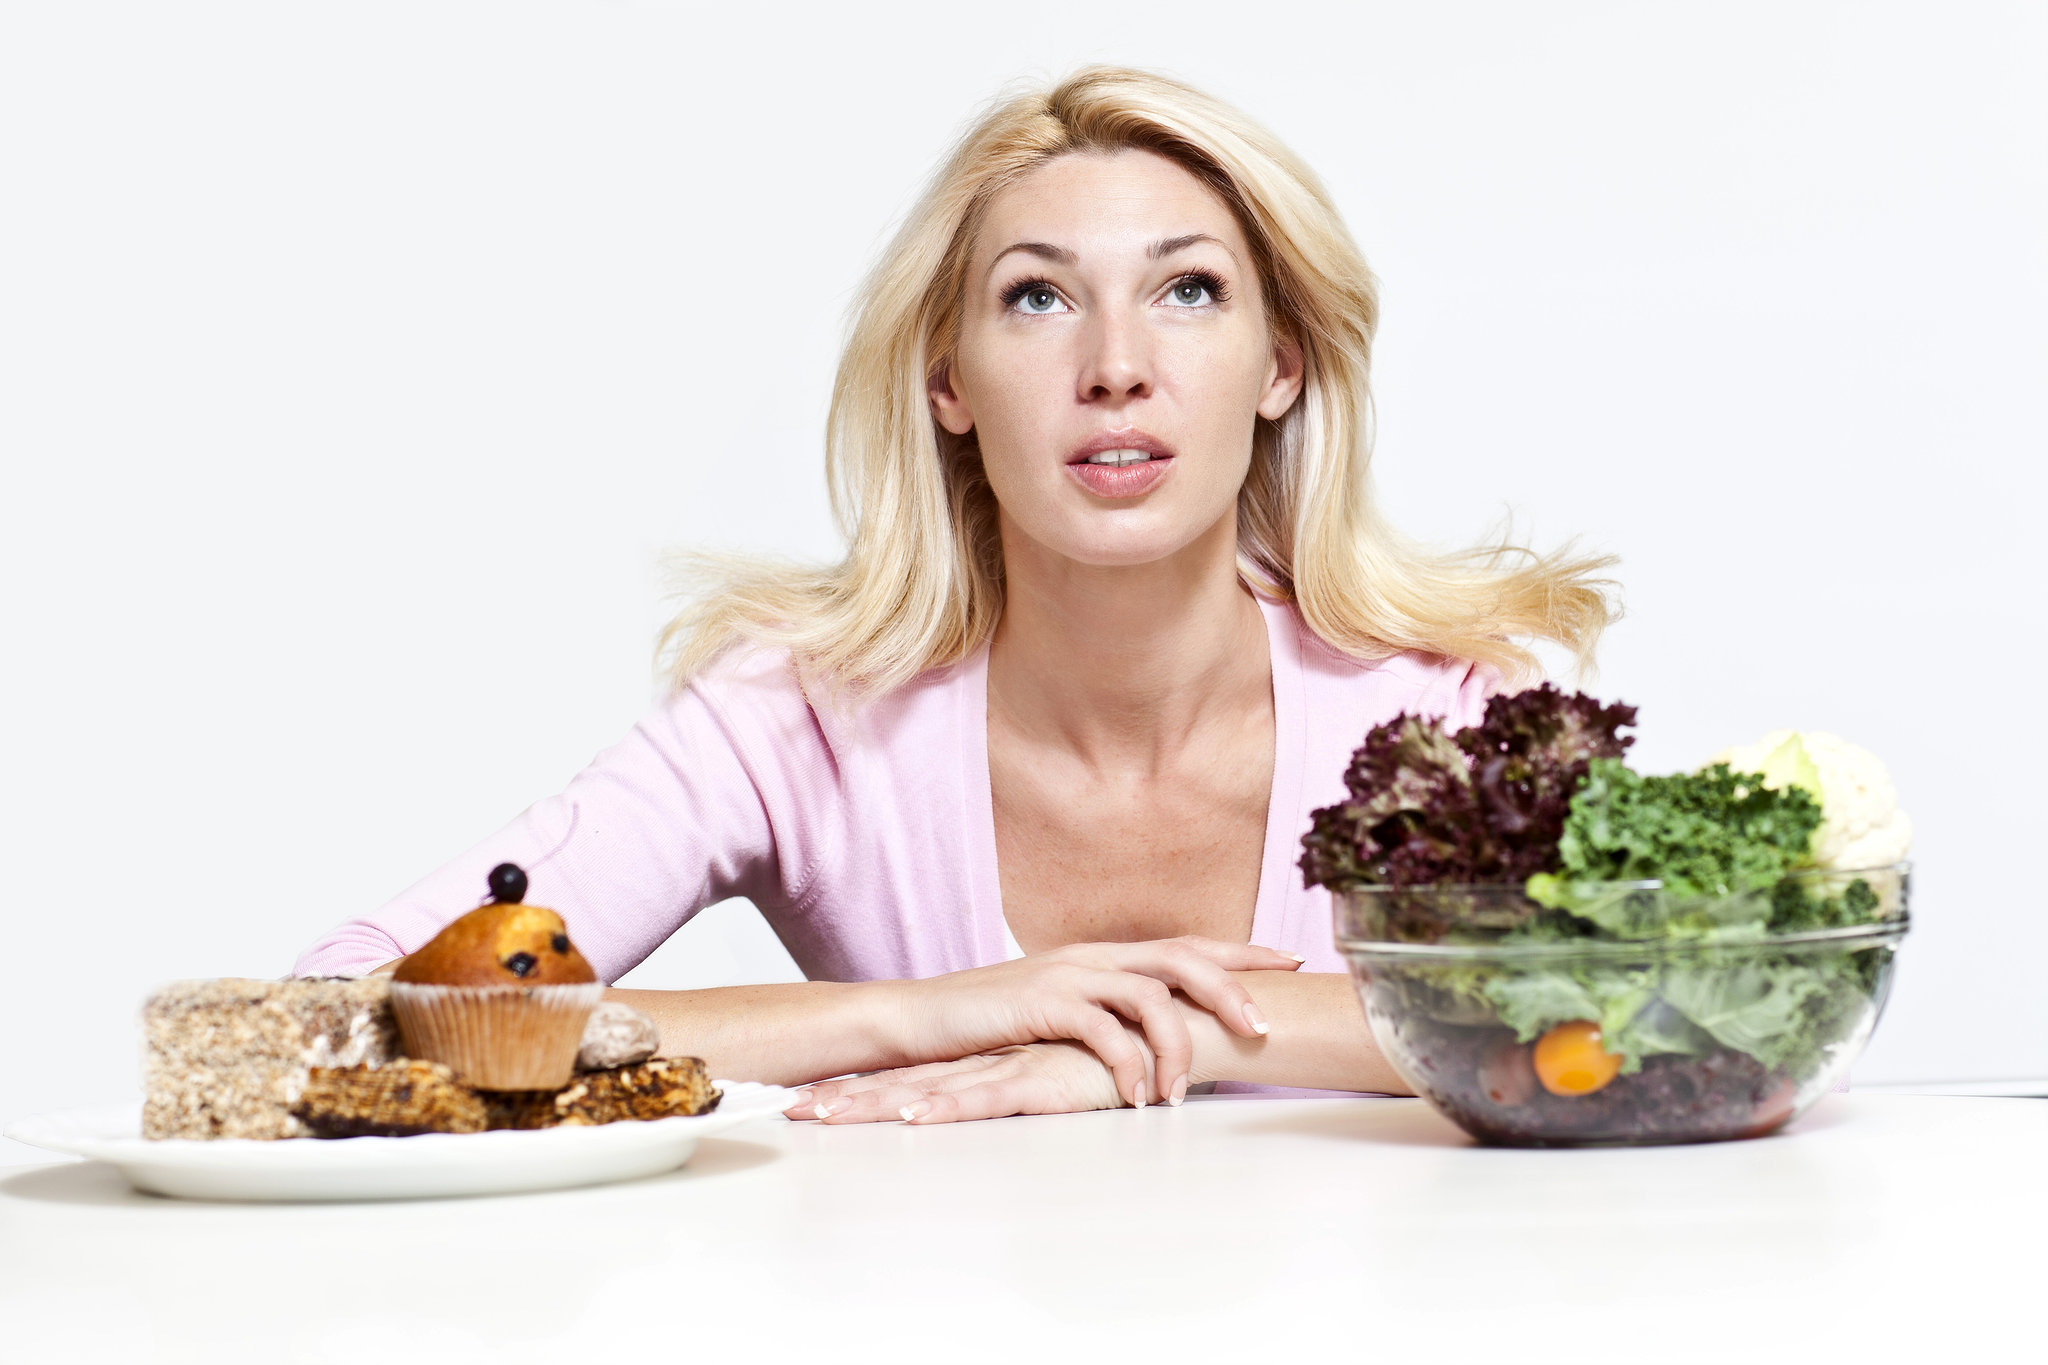 Psychologists Tip Us On 4 Mind-Tricks To Make You a Healthier Eater